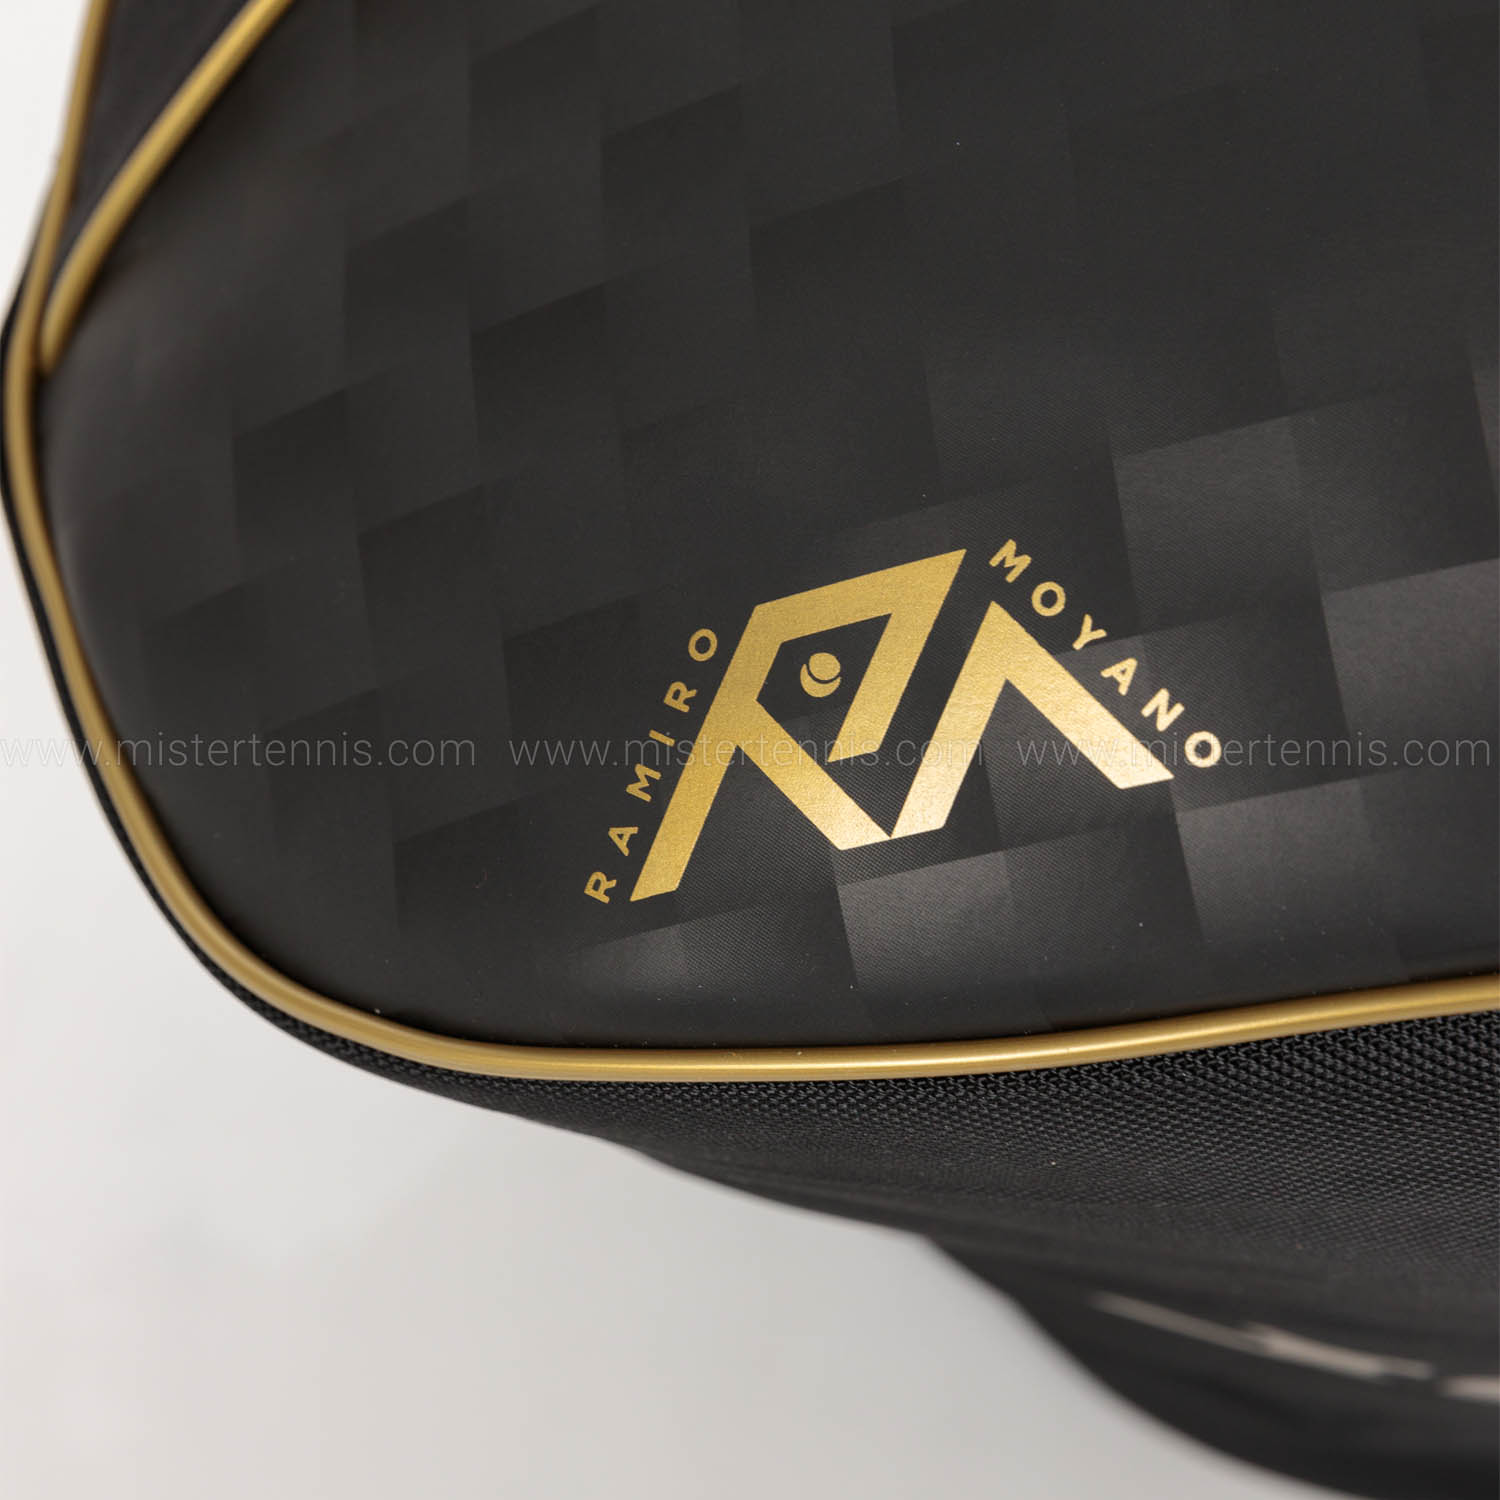 Dunlop Elite Thermo Bag - Black/Gold